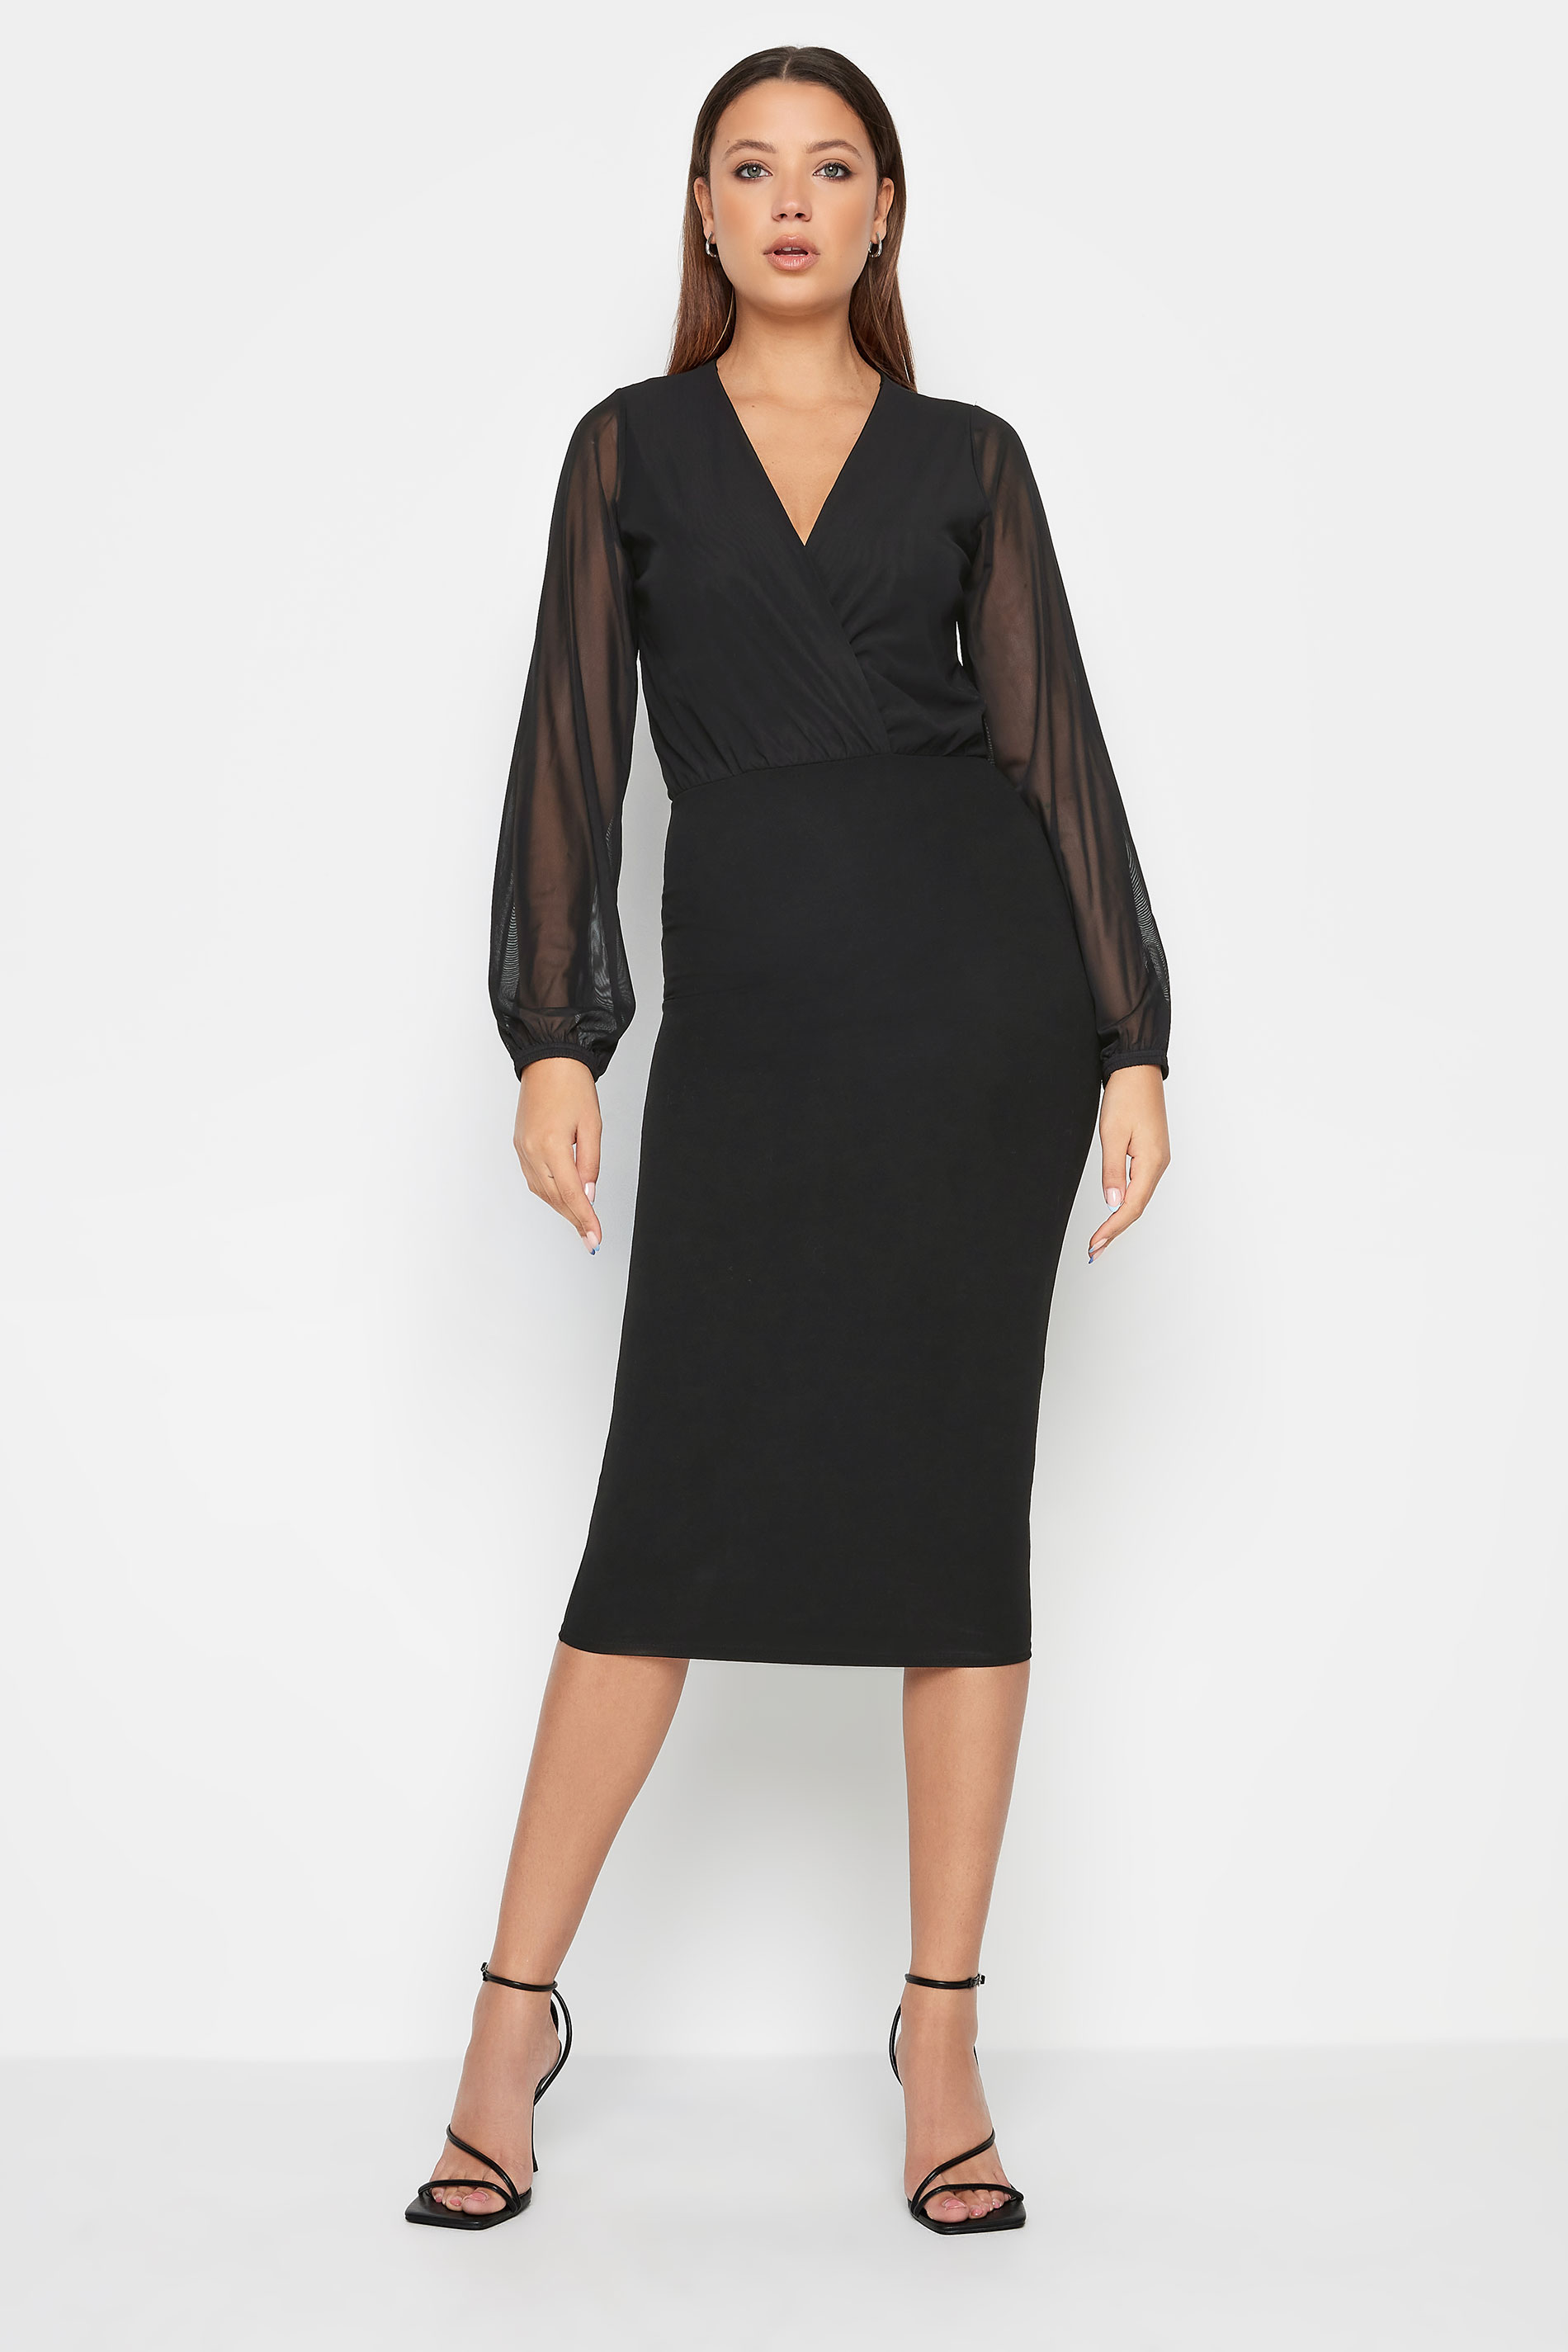 LTS Tall Black Mesh Sleeve Midi Wrap Dress | Long Tall Sally  2